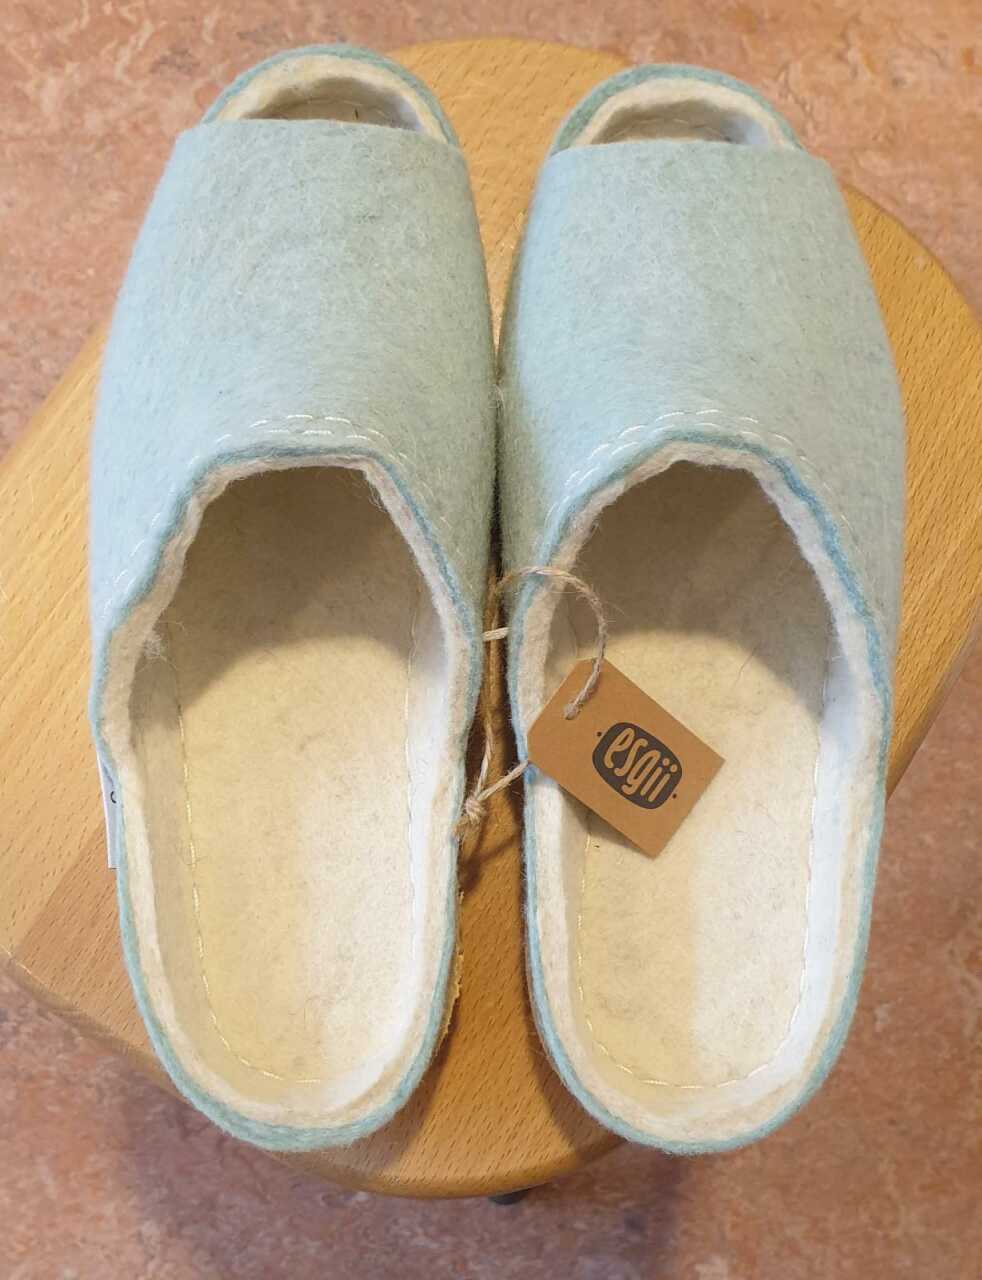 Handgemaakte slippers van esgii